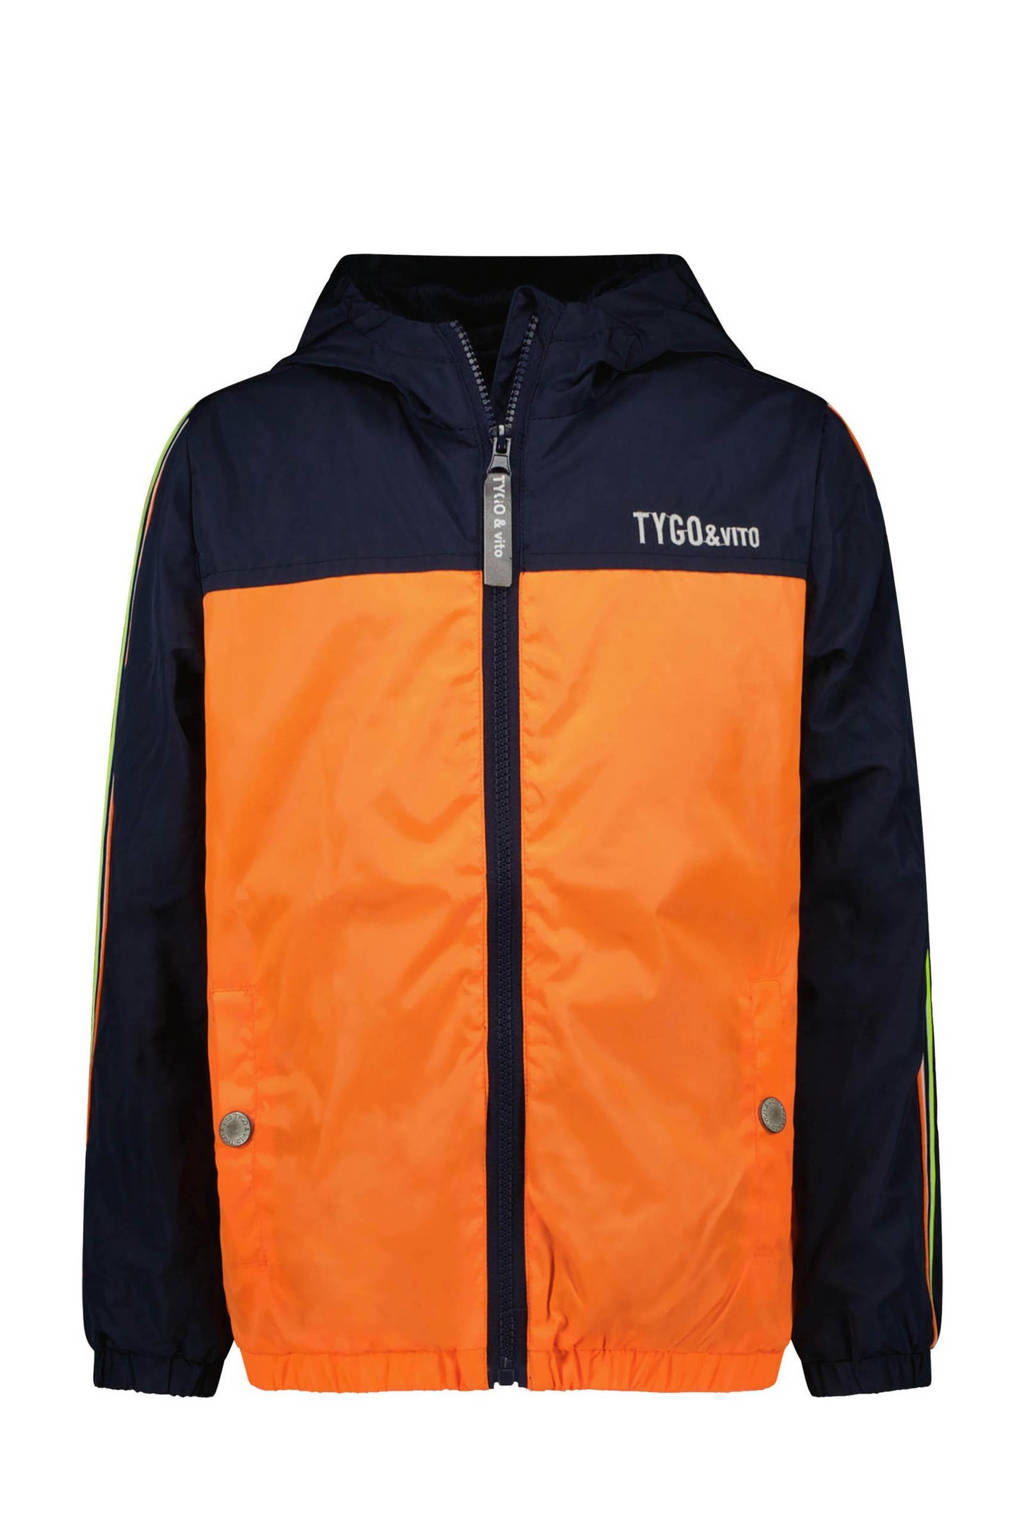 kamp Derbevilletest Registratie TYGO & vito zomerjas van gerecycled polyester oranje/donkerblauw | wehkamp